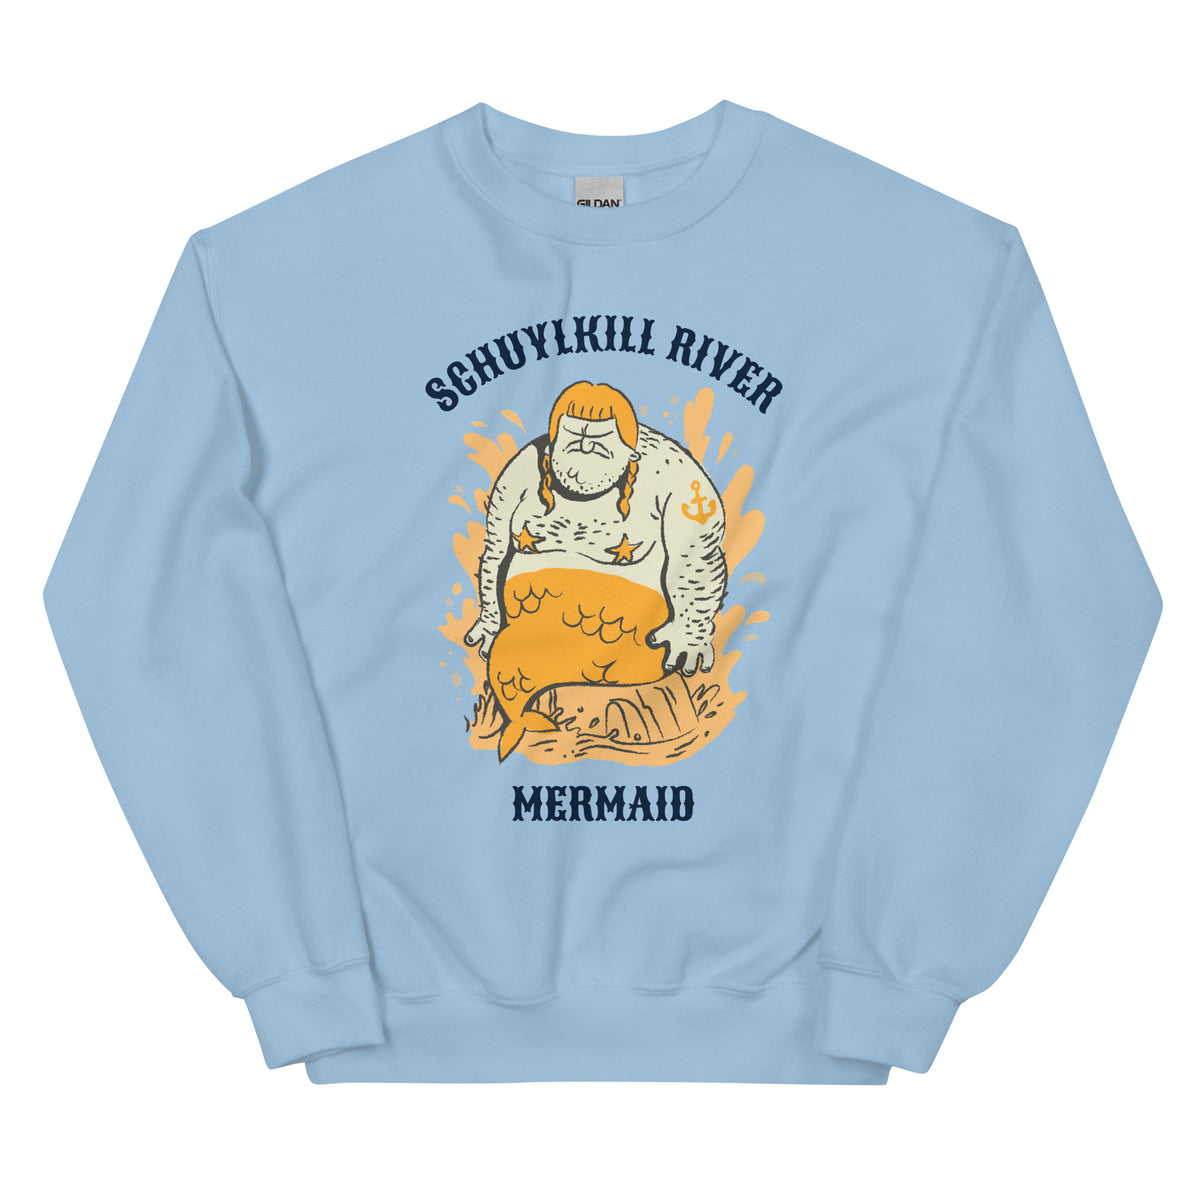 Funny Philadelphia Schuylkill River Mermaid light blue sweatshirt from Phillygoat